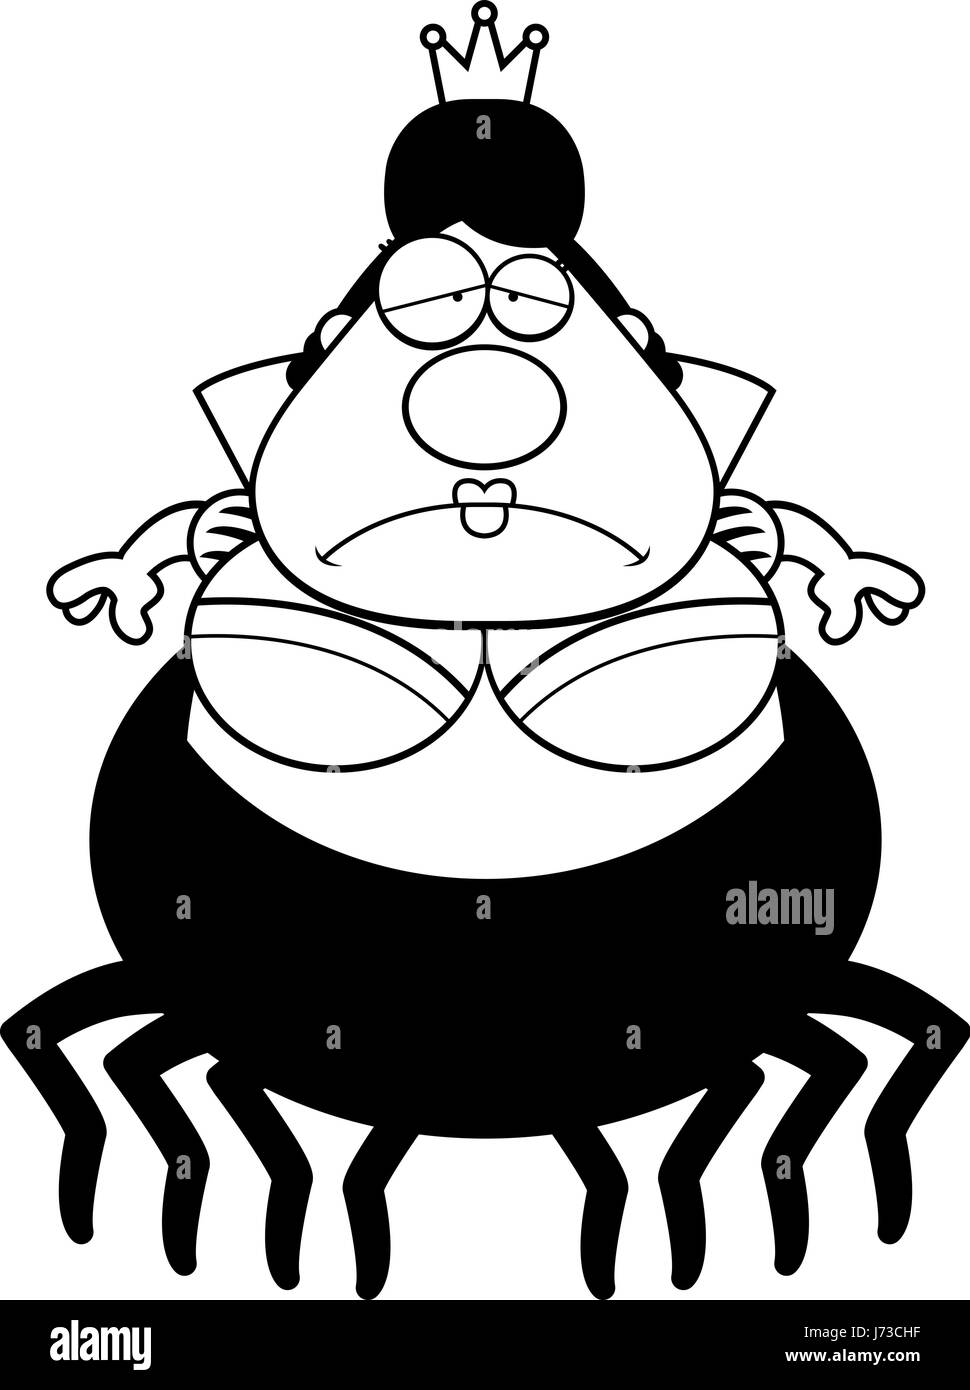 A cartoon illustration of a spider queen looking sad. Stock Vector